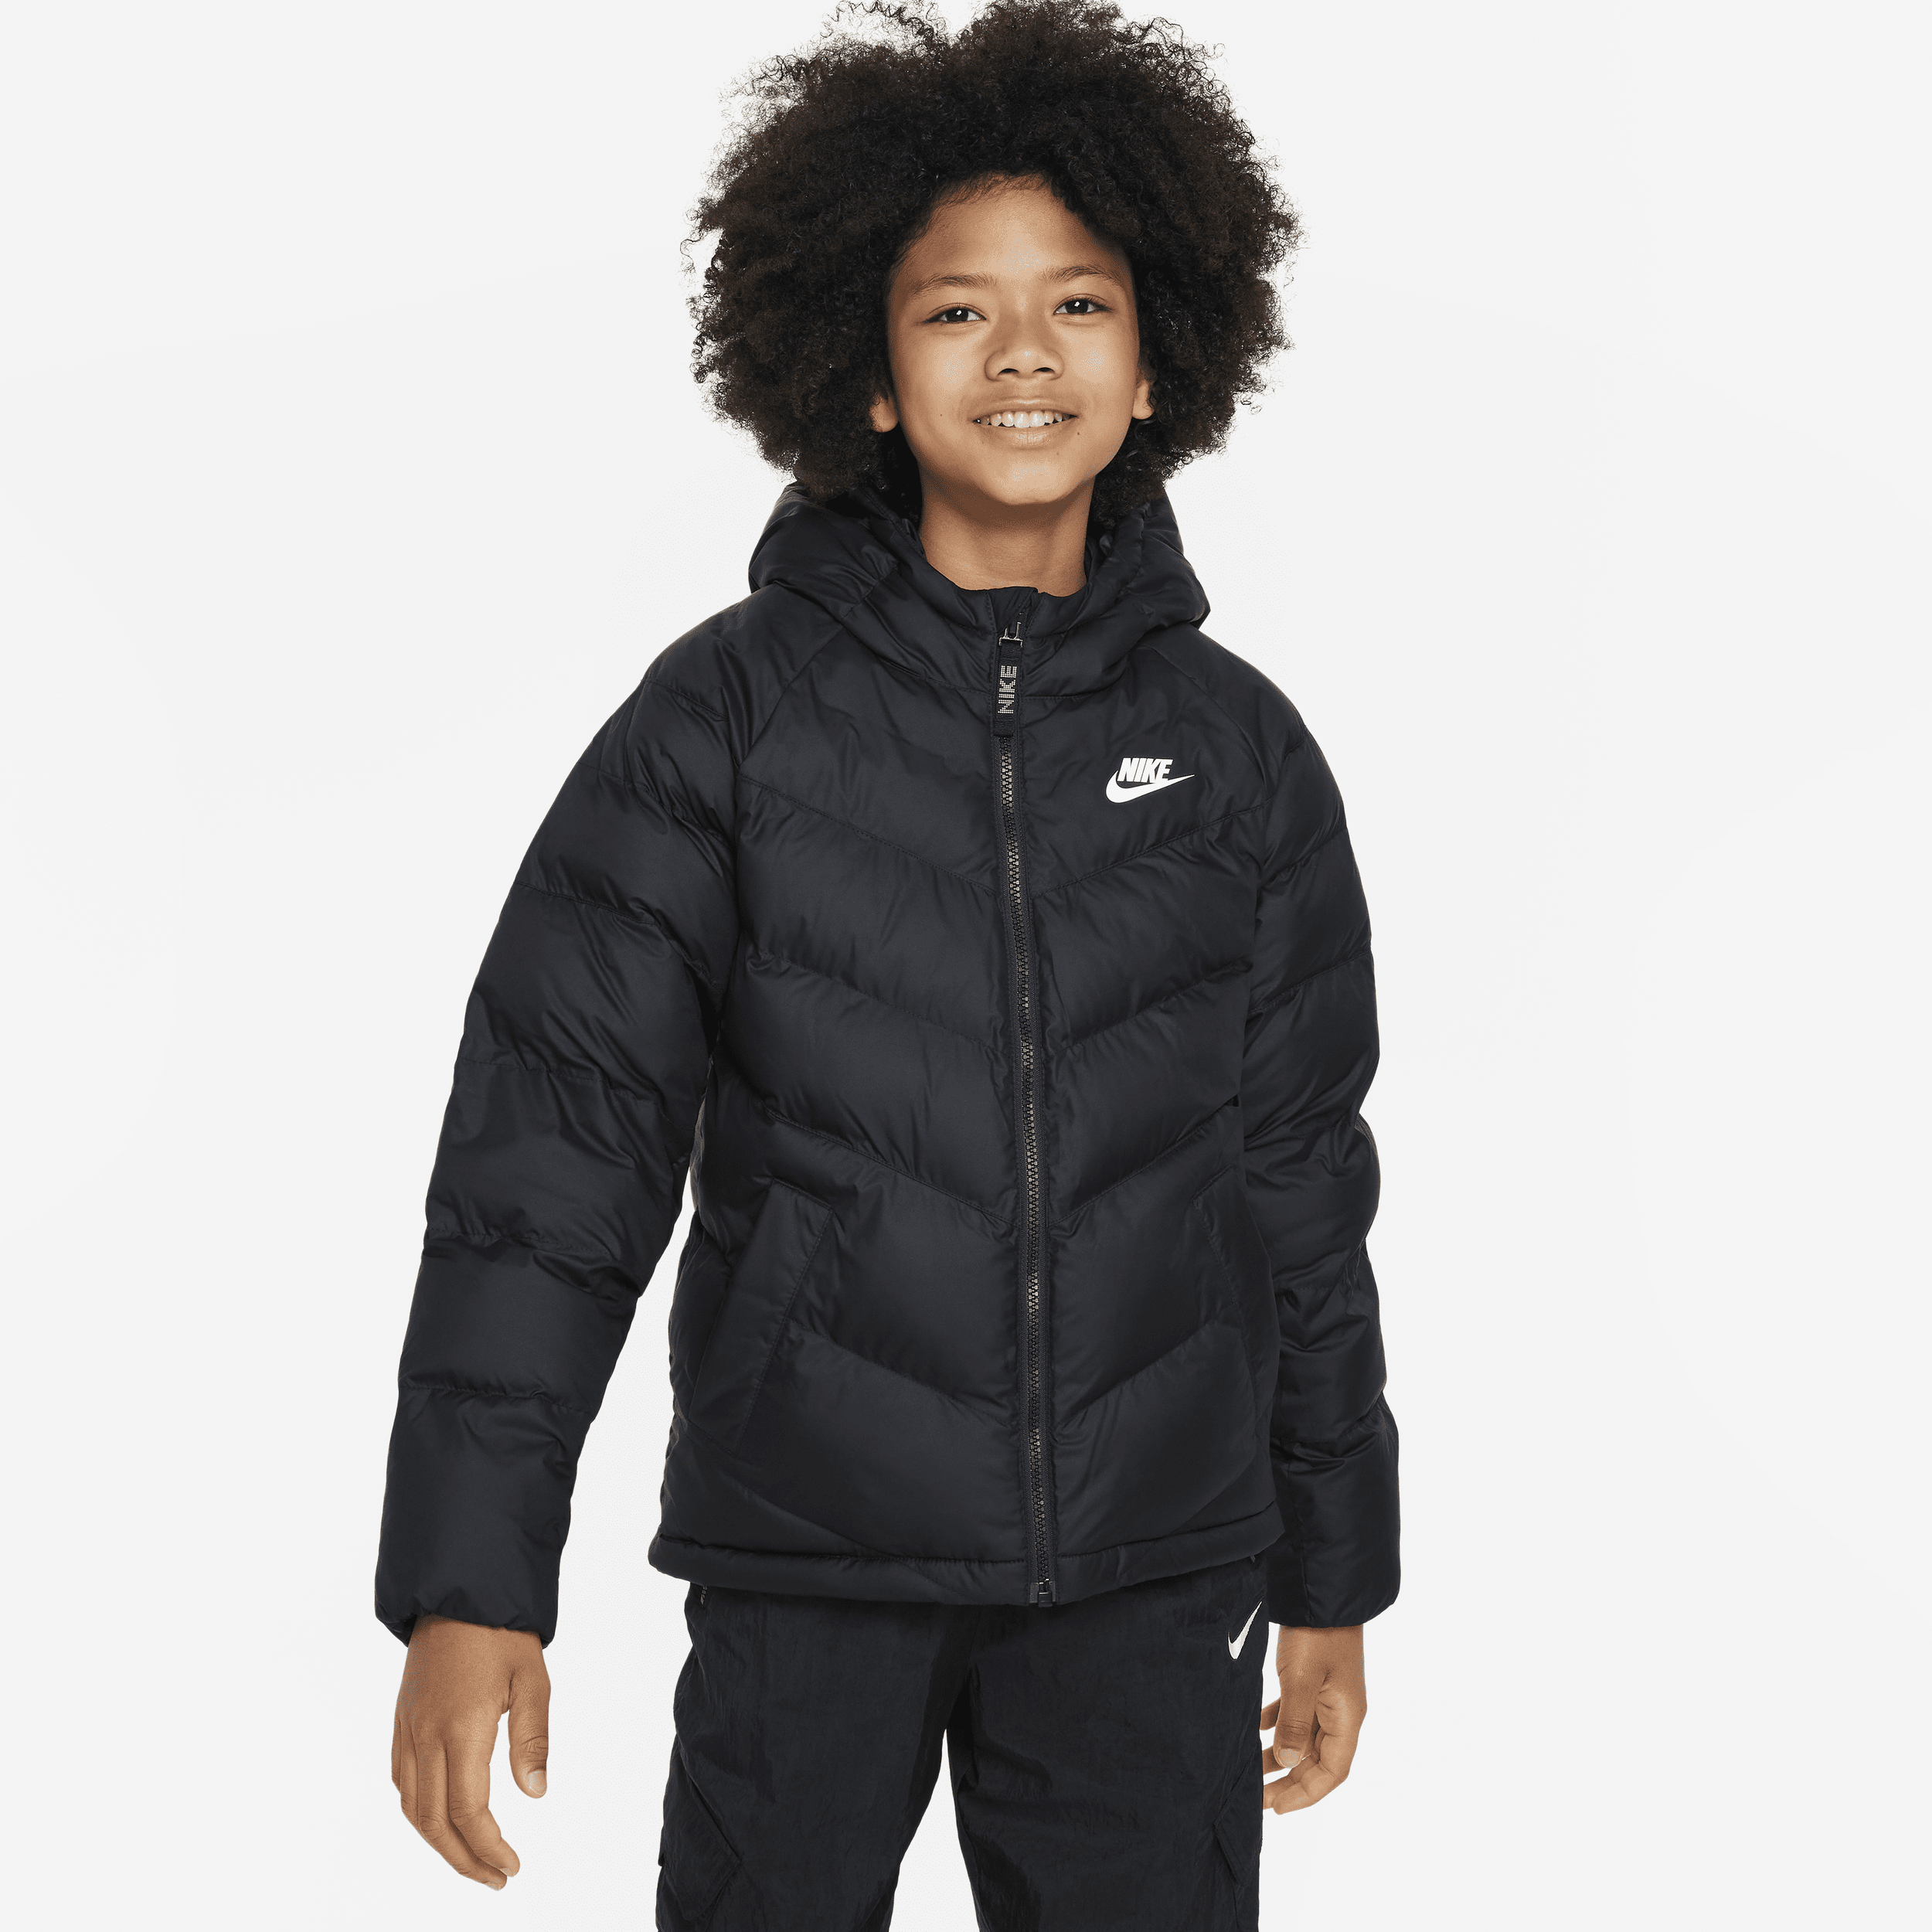 Nike Sportswear kinderjack met synthetische vulling en capuchon - Zwart